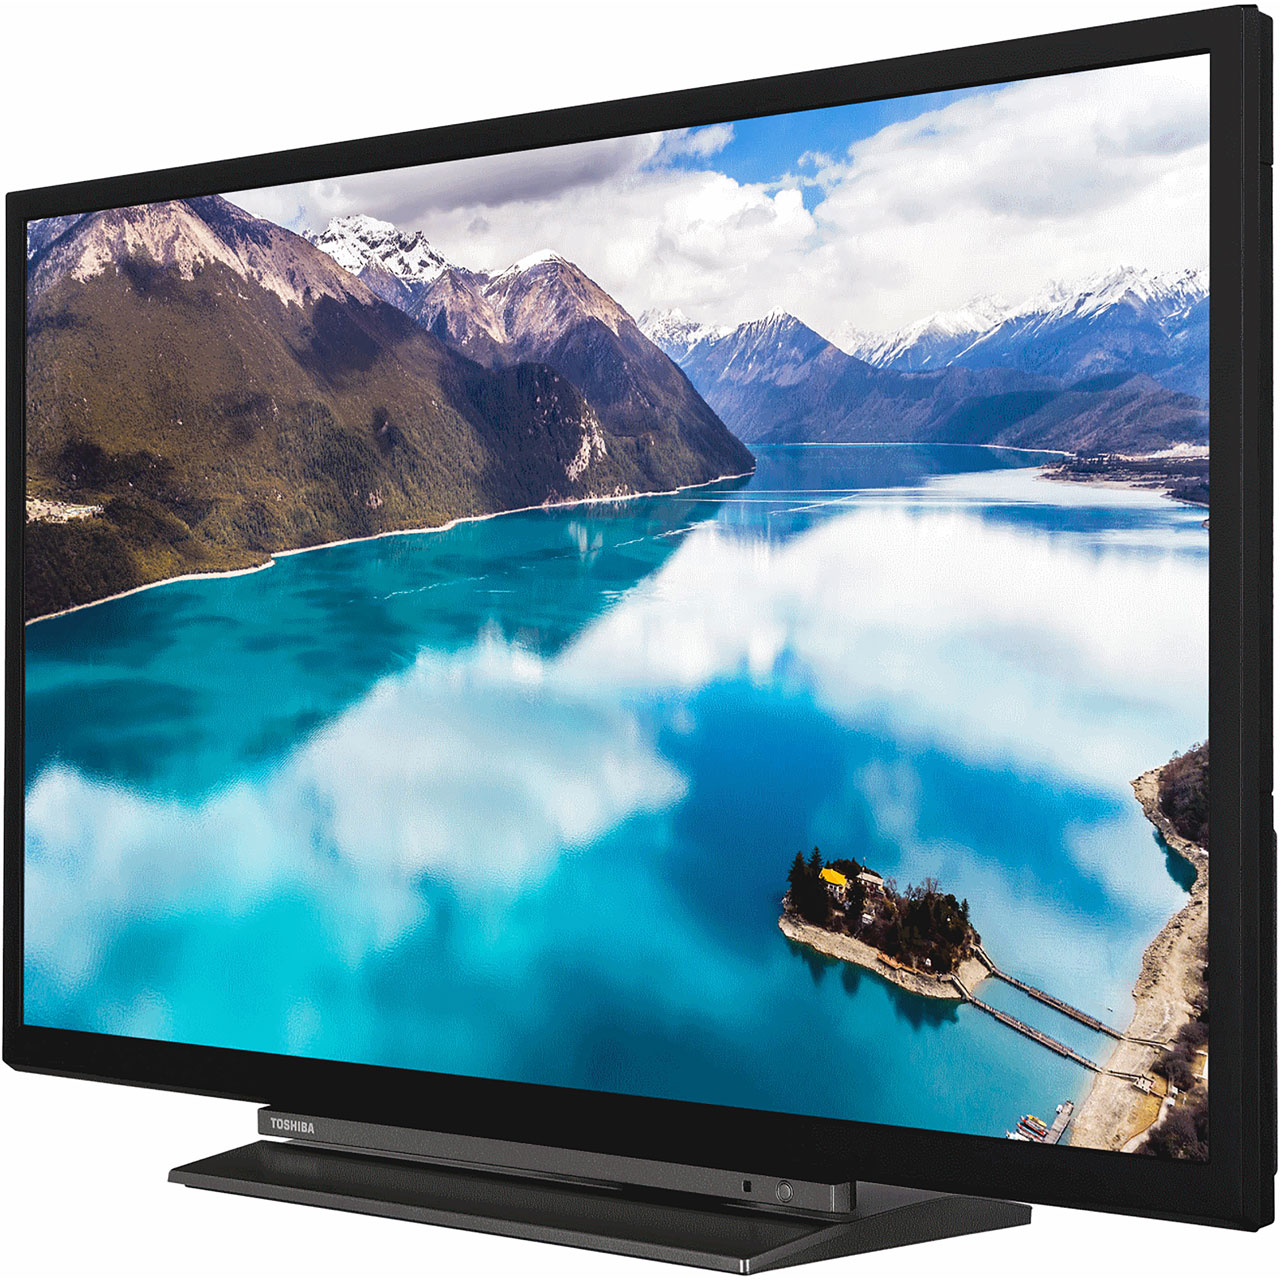 Toshiba 32ll3a63db 32 Inch Tv Smart 1080p Full Hd Led Freeview Hd 3